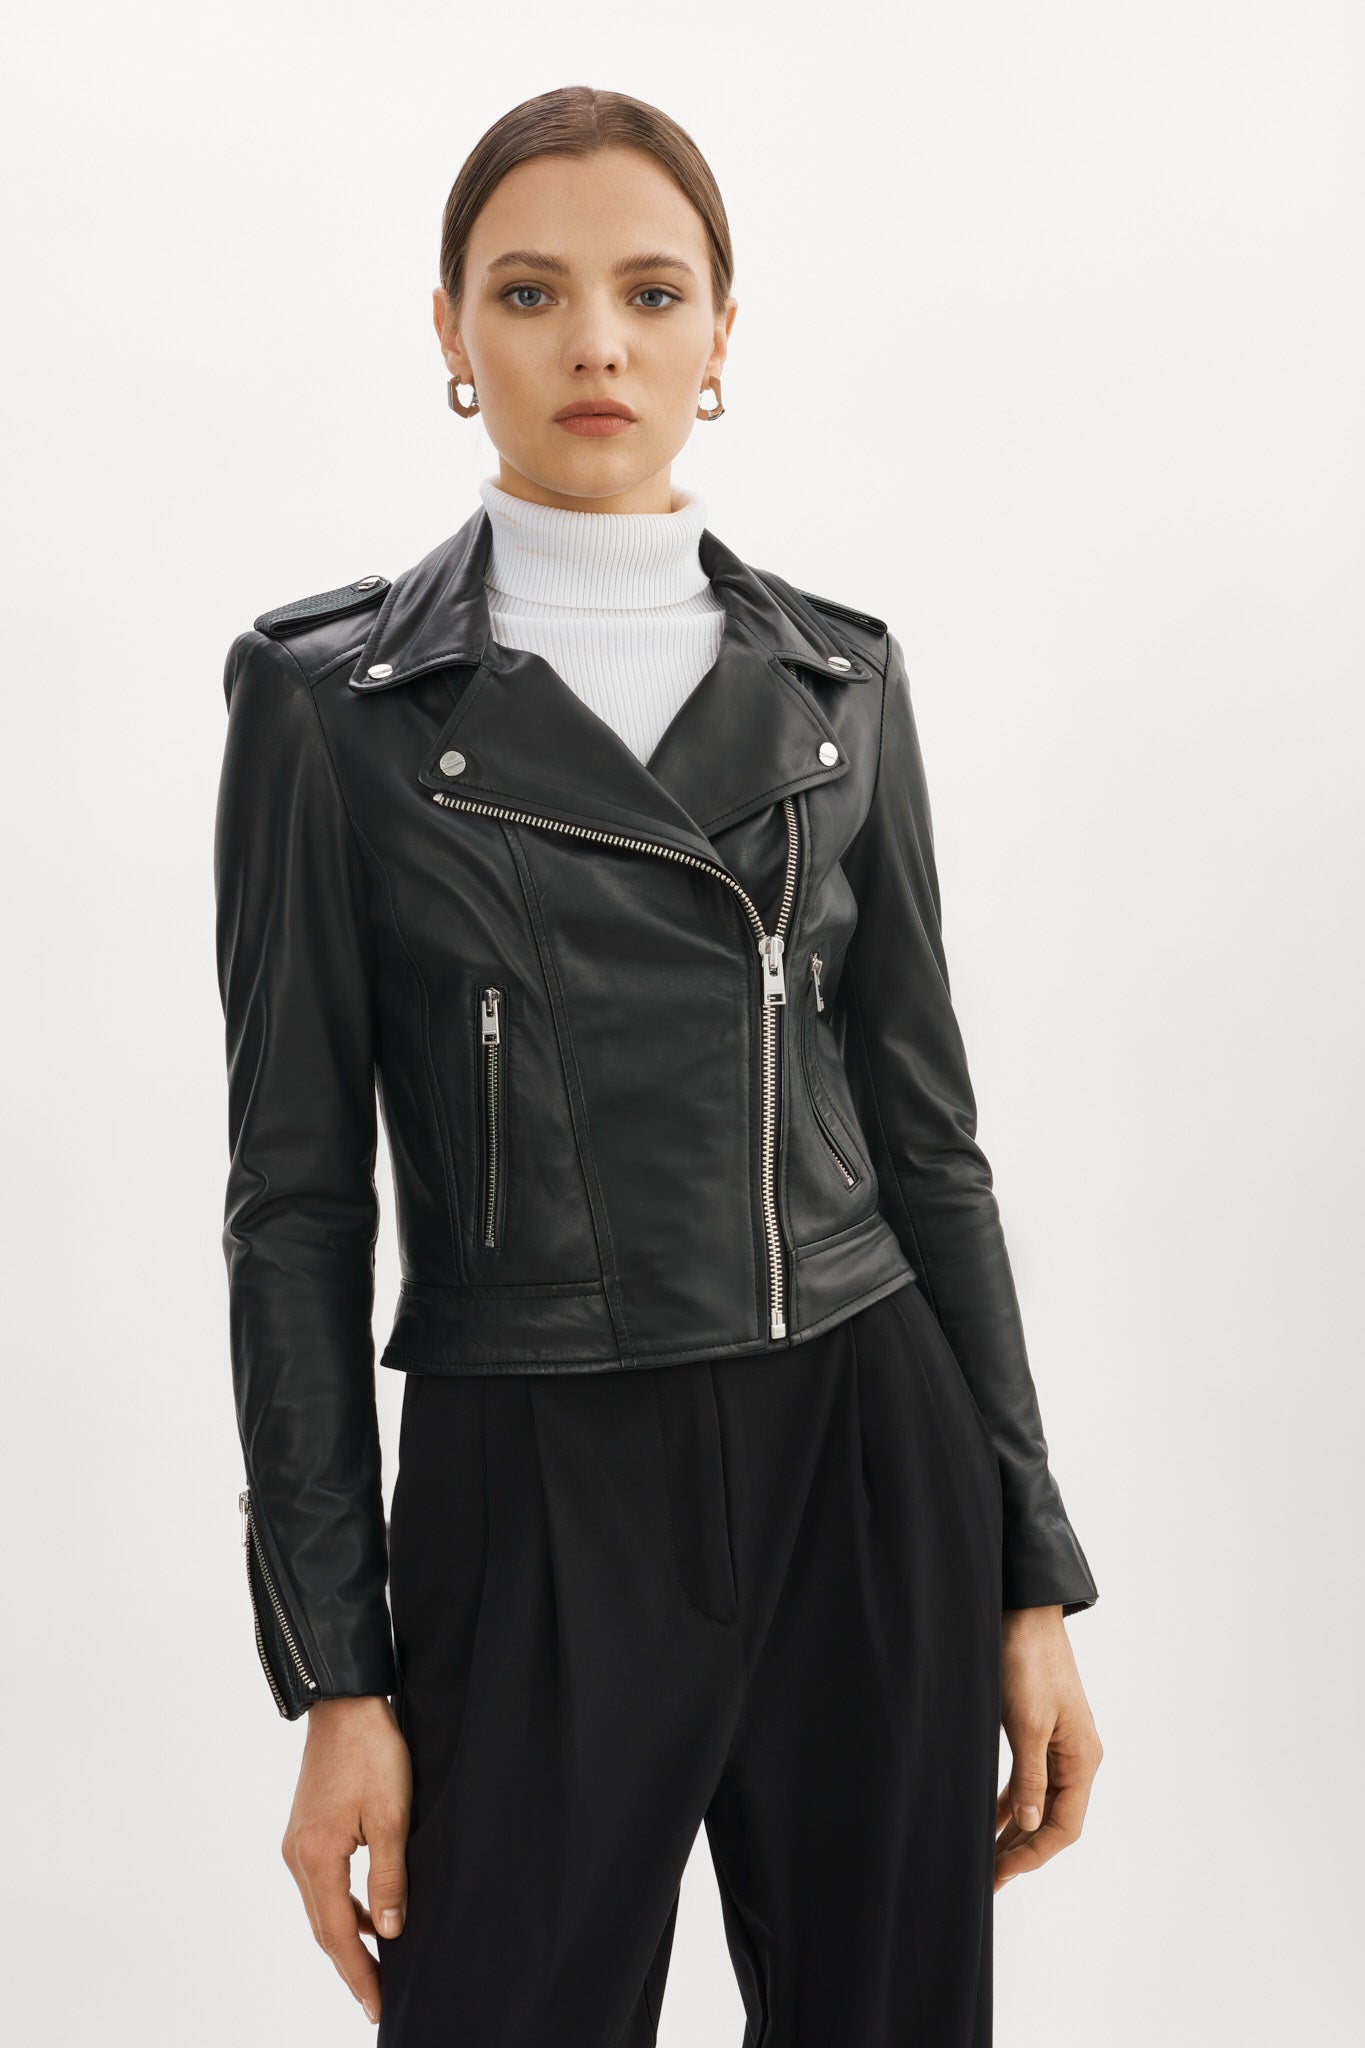 LEO BOUTIQUE Donna Iconic Leather Biker Jacket Black Silver LAMARQUE 